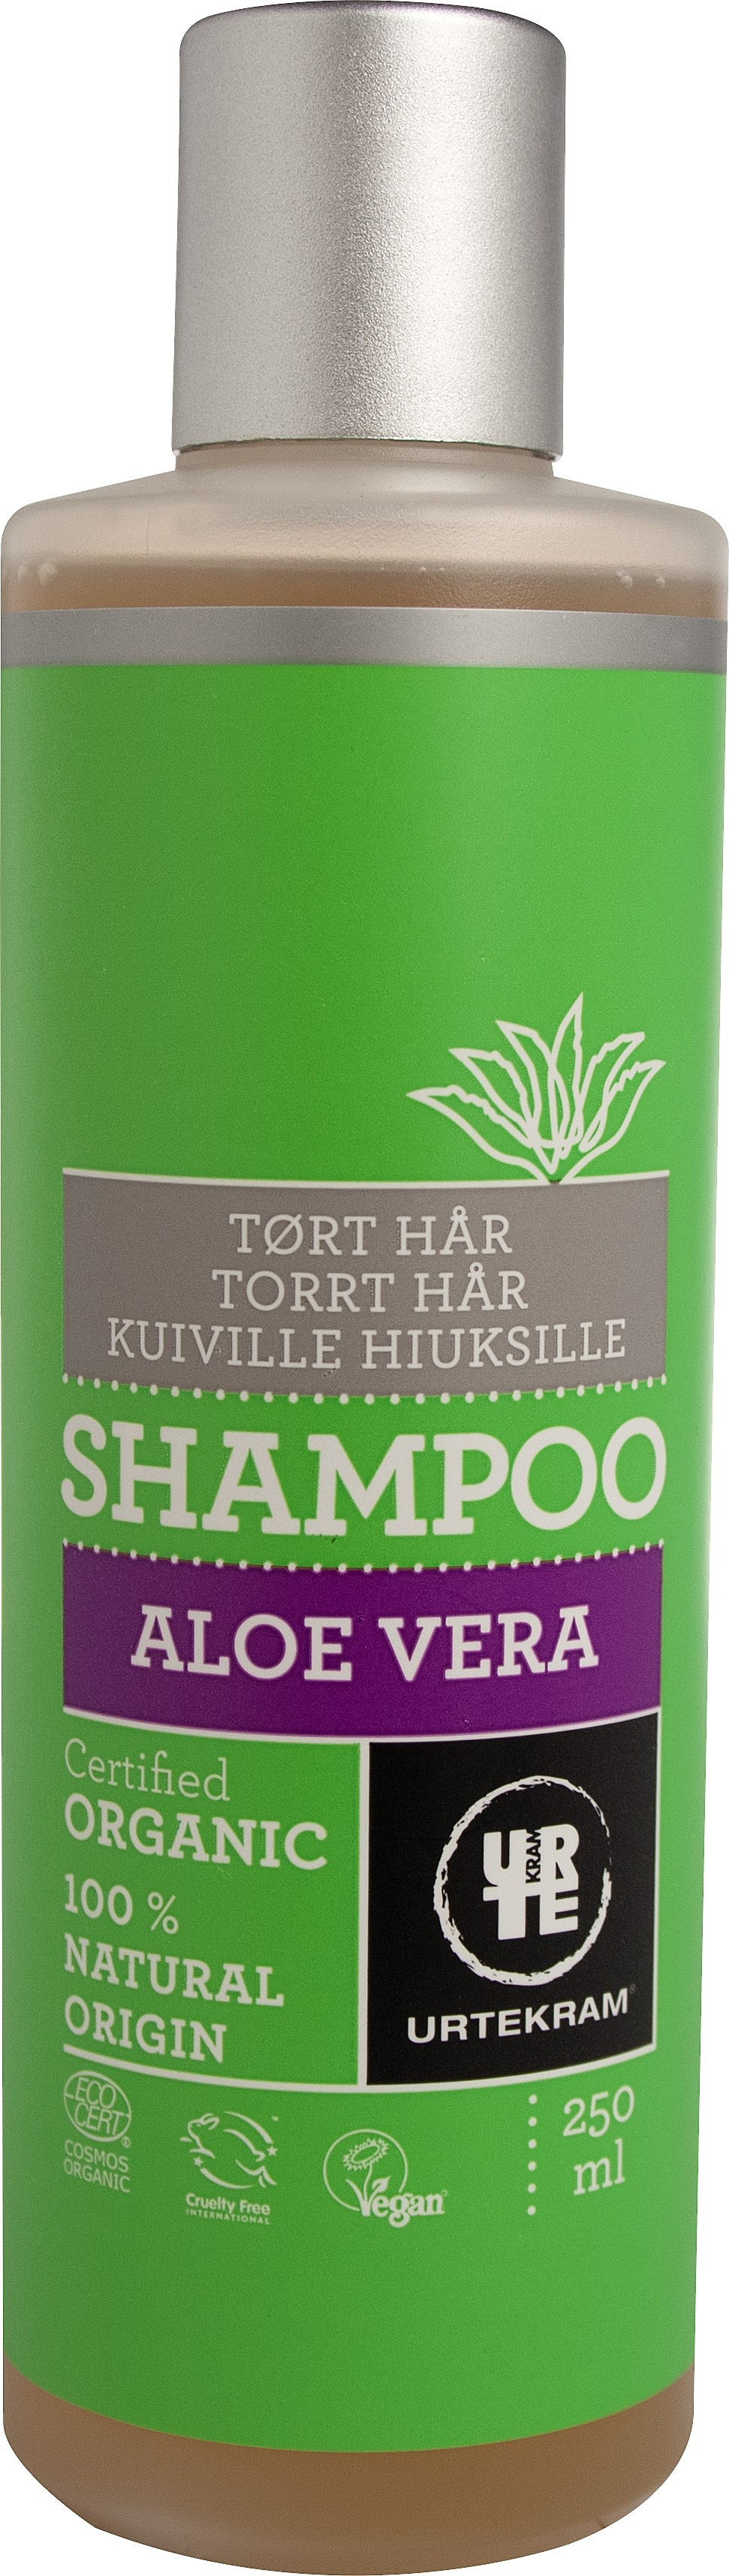 Urtekram Aloe Vera Shampoo Dry 250ml